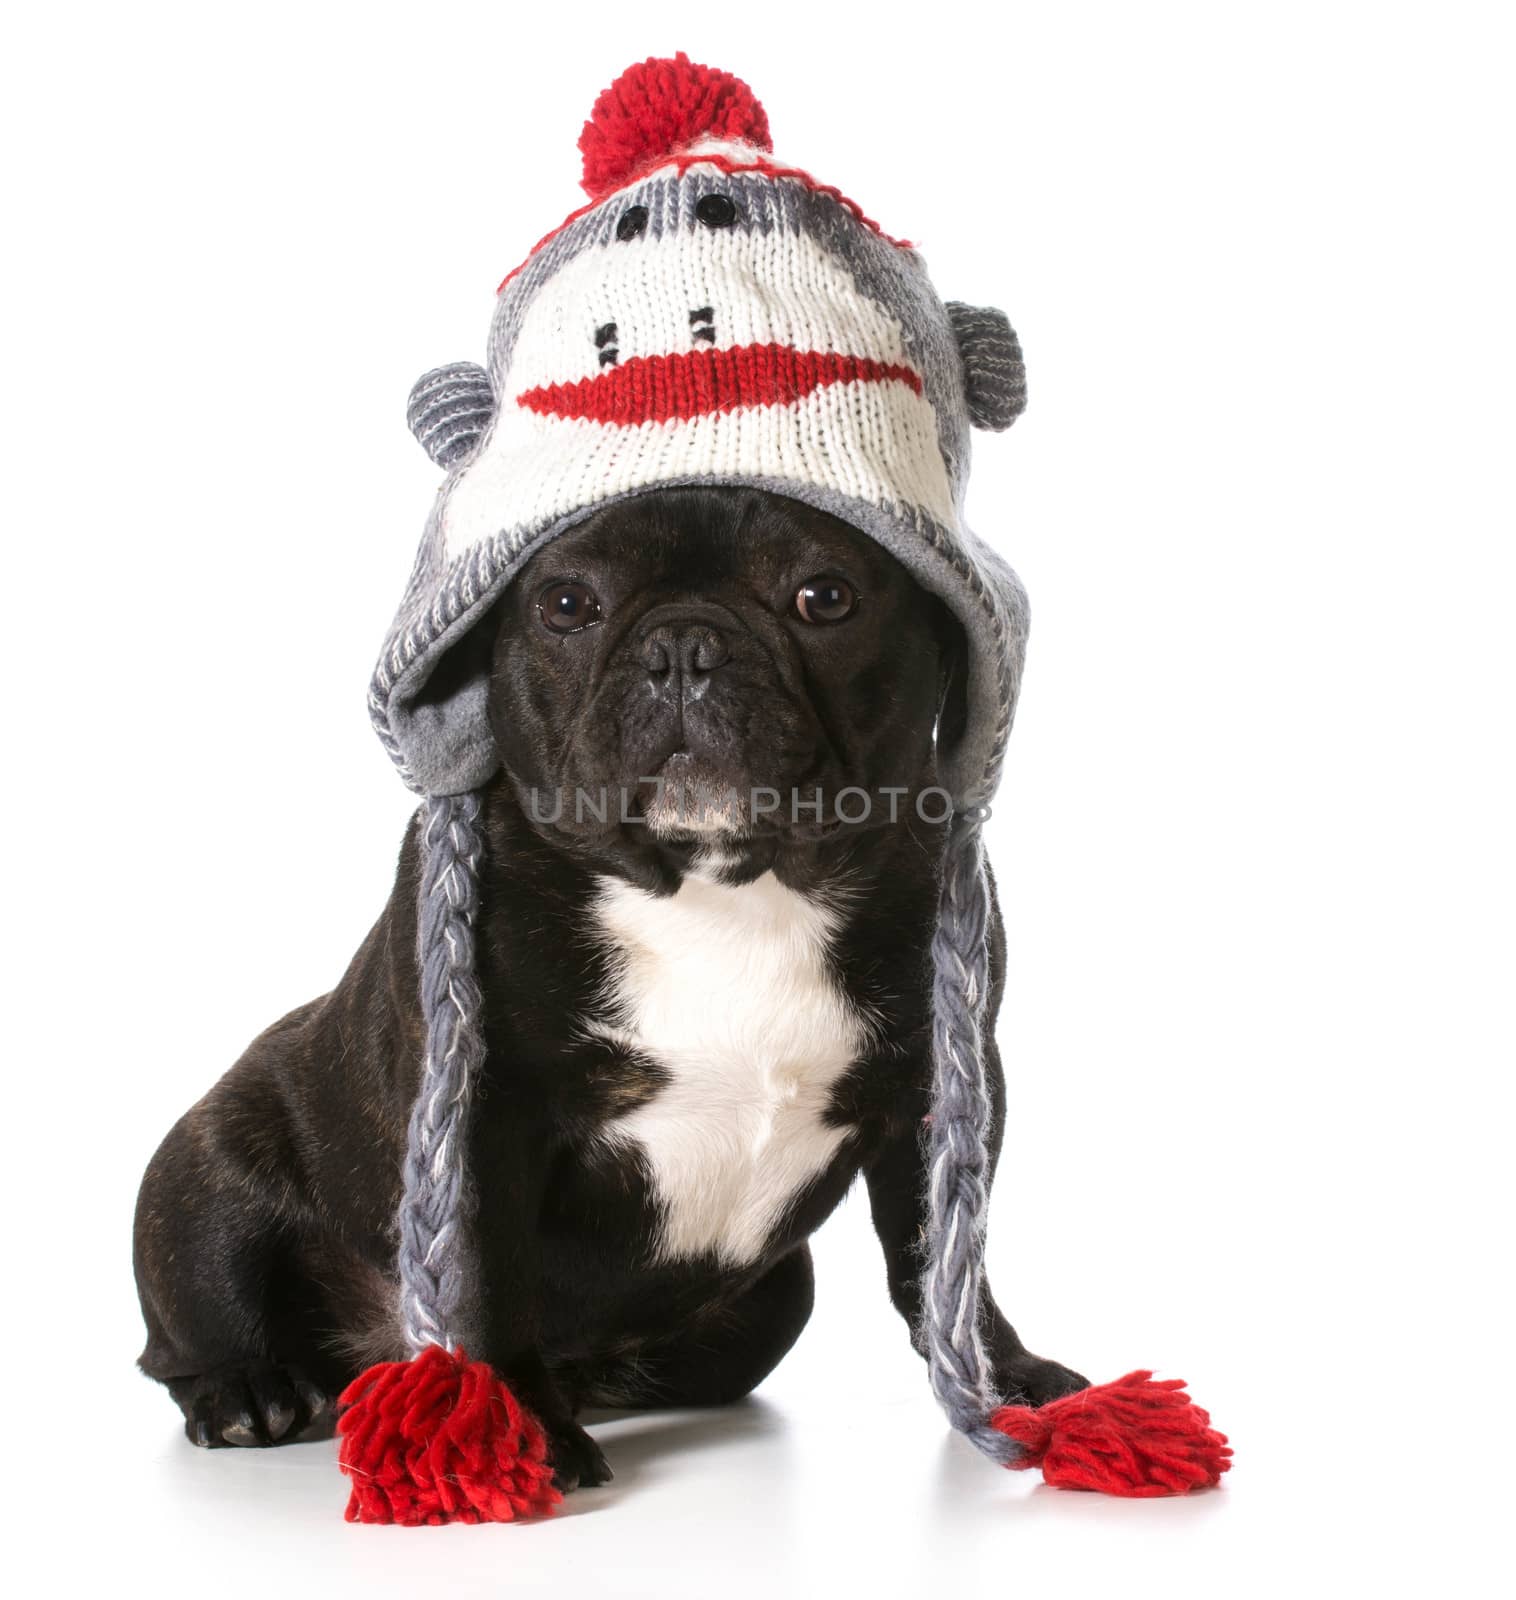 french bulldog wearing winter hat